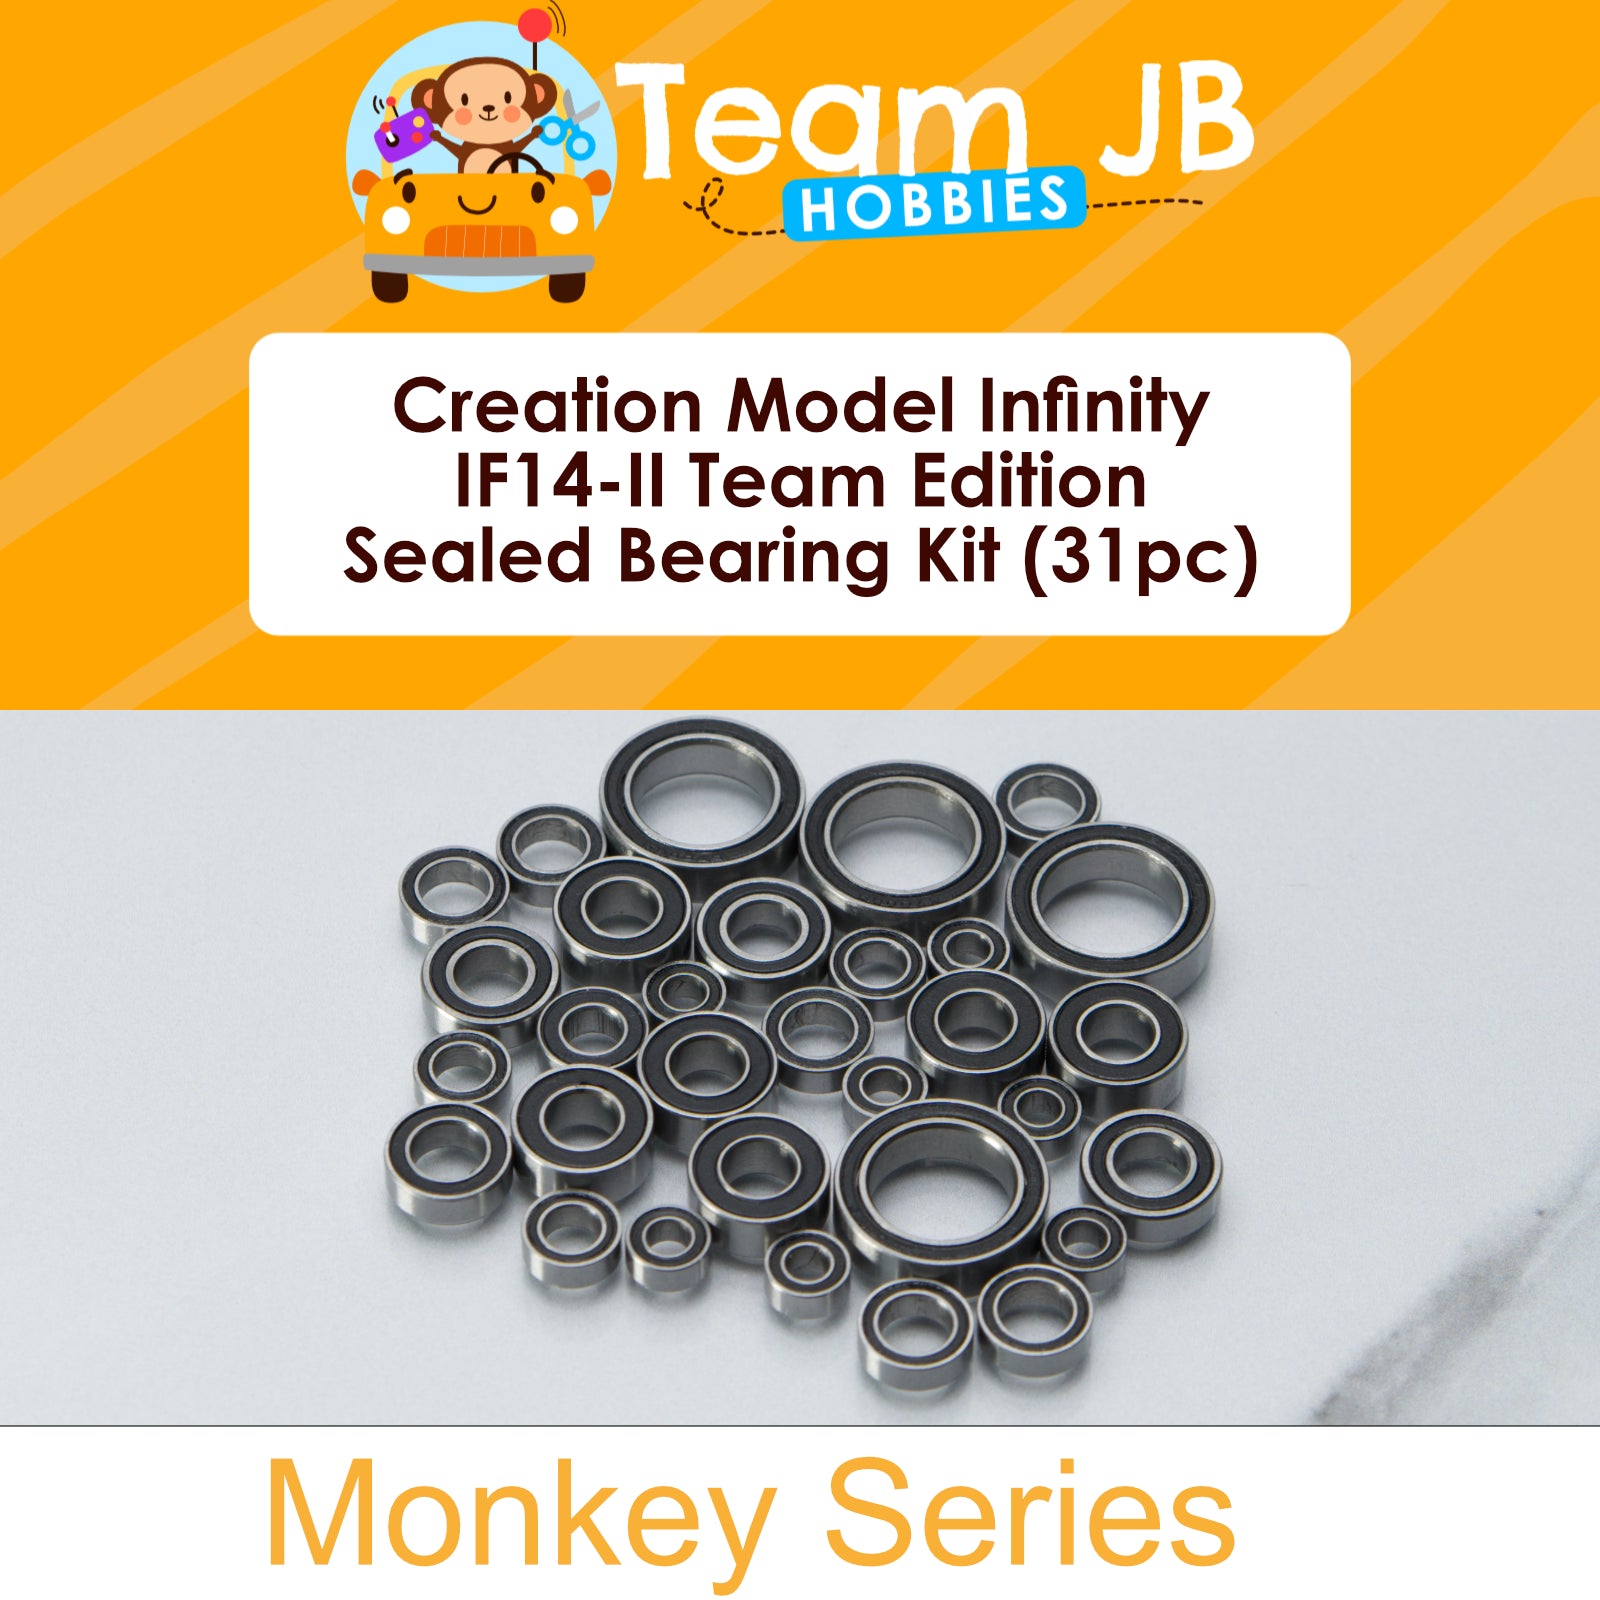 Creation Model Infinity IF14-II Team Edition - Sealed Bearing Kit